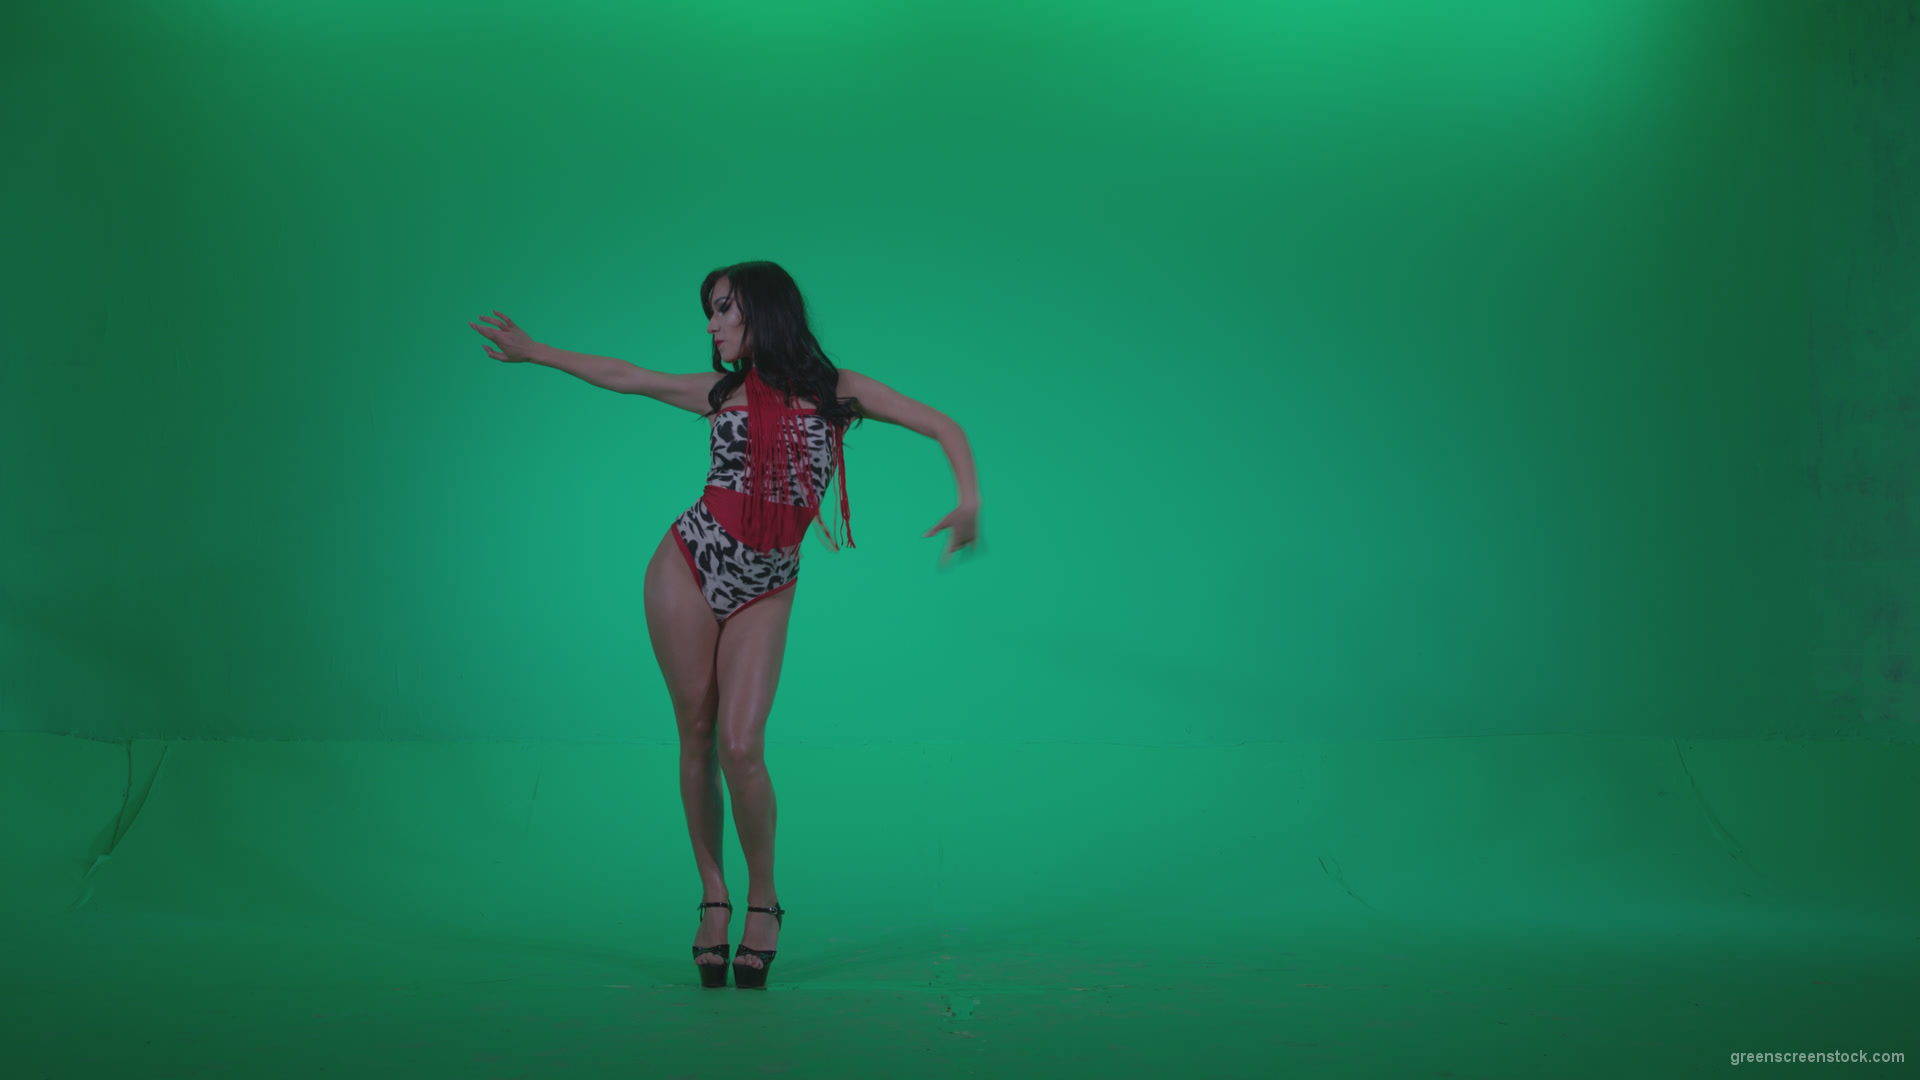 Go-go-Dancer-Red-Dress-r3-Green-Screen-Video-Footage_009 Green Screen Stock